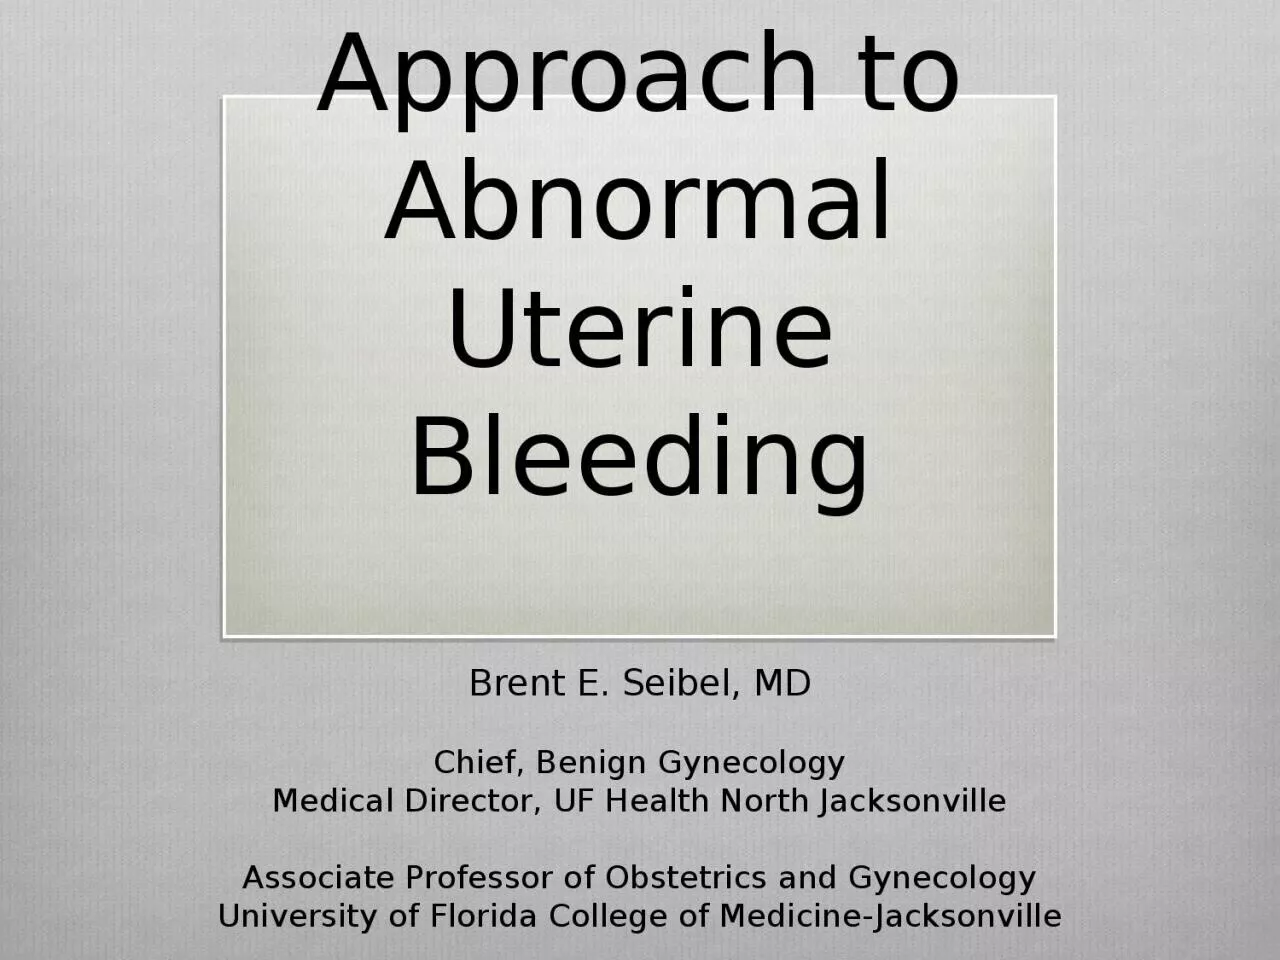 Approach to Abnormal Uterine Bleeding